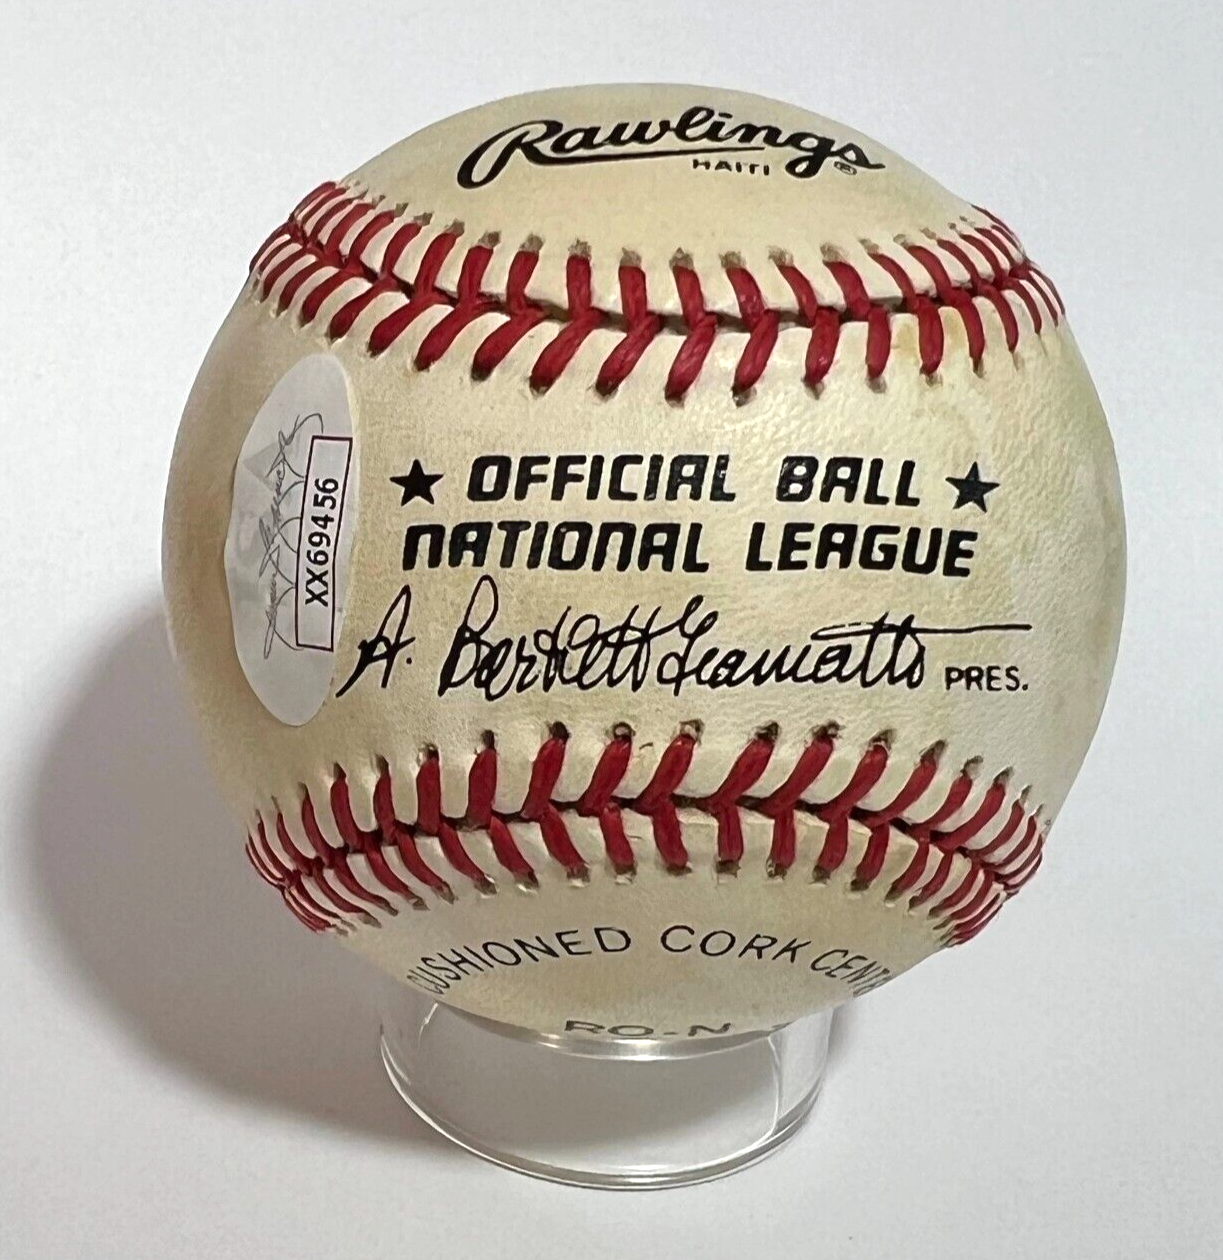 Hank Aaron Single Signed Autograph Baseball. Braves. JSA signature.